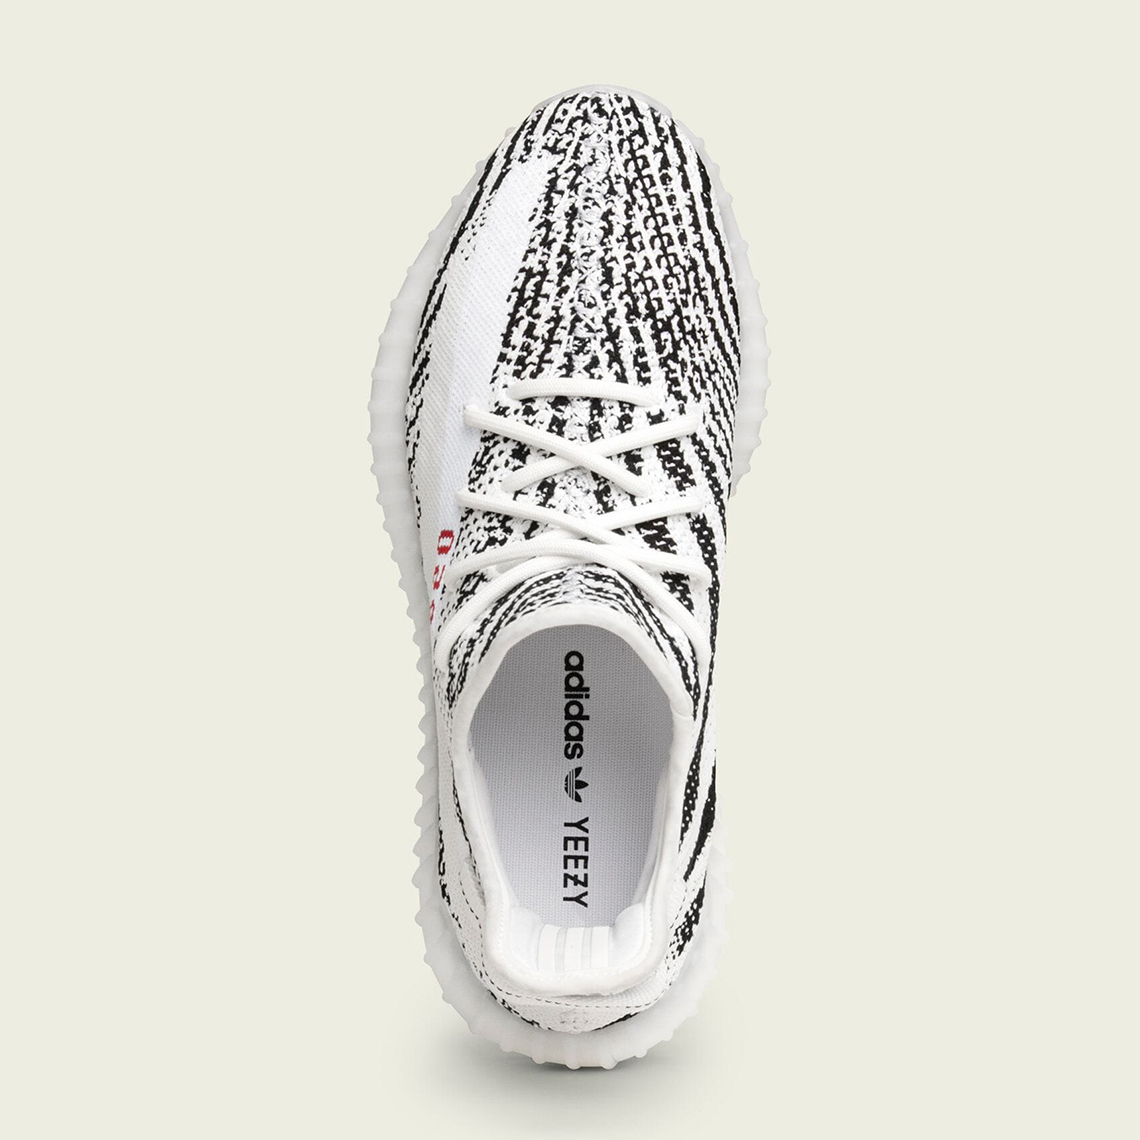 Creation teens lightweight adidas Yeezy Boost 350 v2 Zebra 2022 Release Date | SneakerNews.com